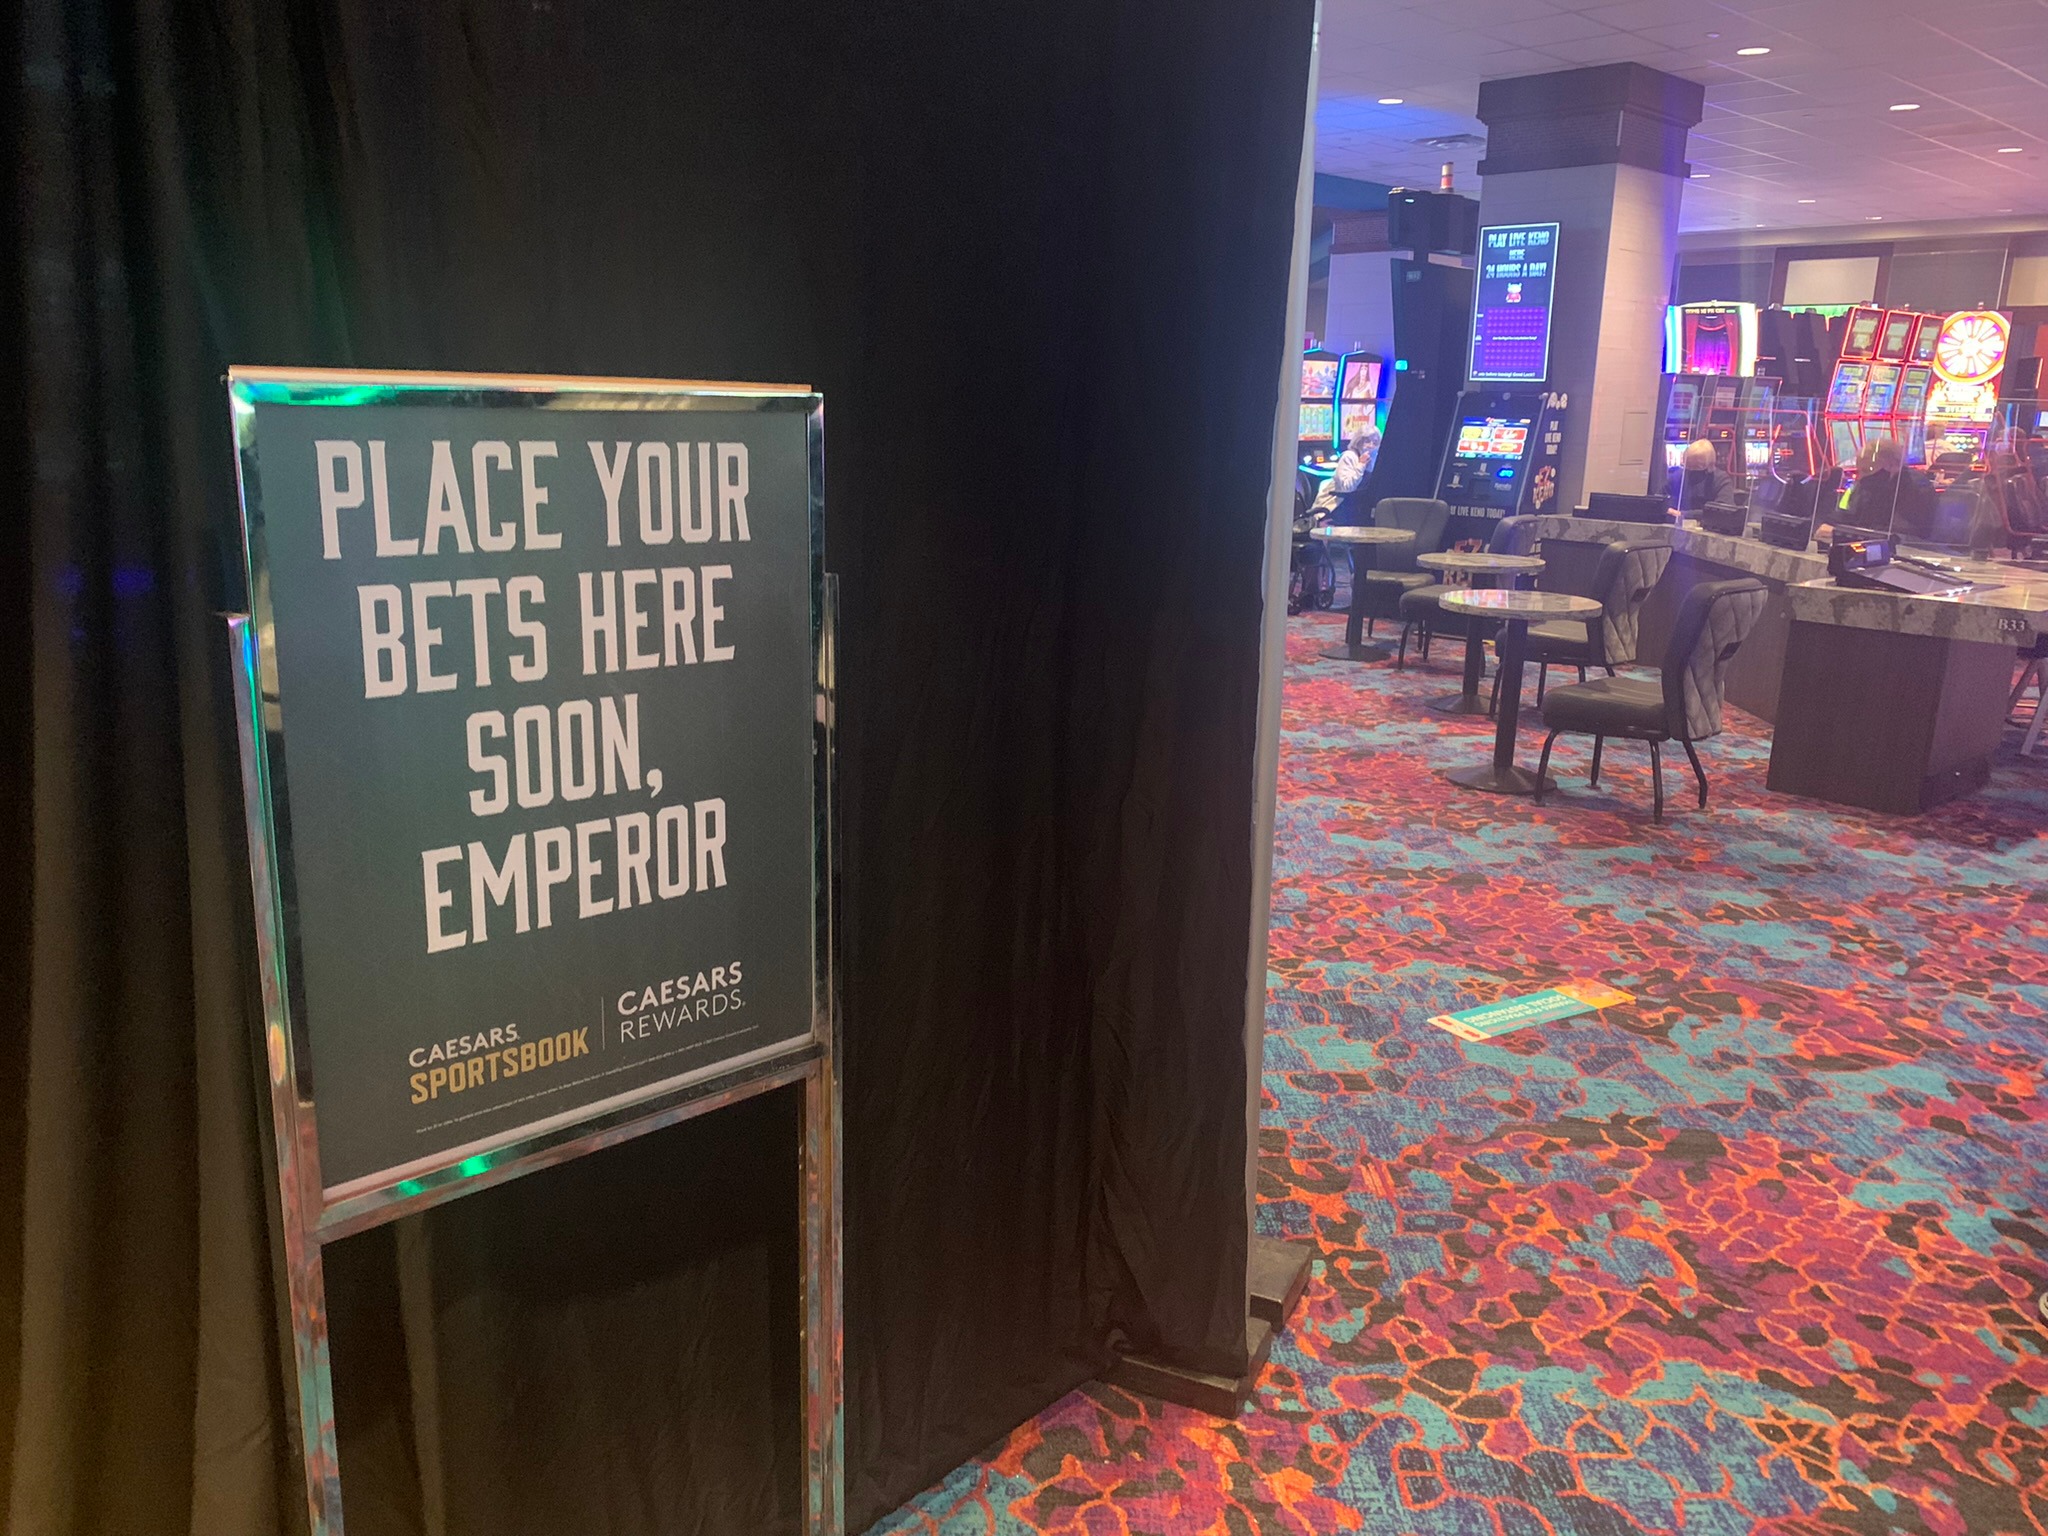 Caesars will continue to operate a sportsbook at its Ak-Chin casino in Maricopa despite the tribe losing its sports betting license. [Harrah's Ak-Chin Casino]